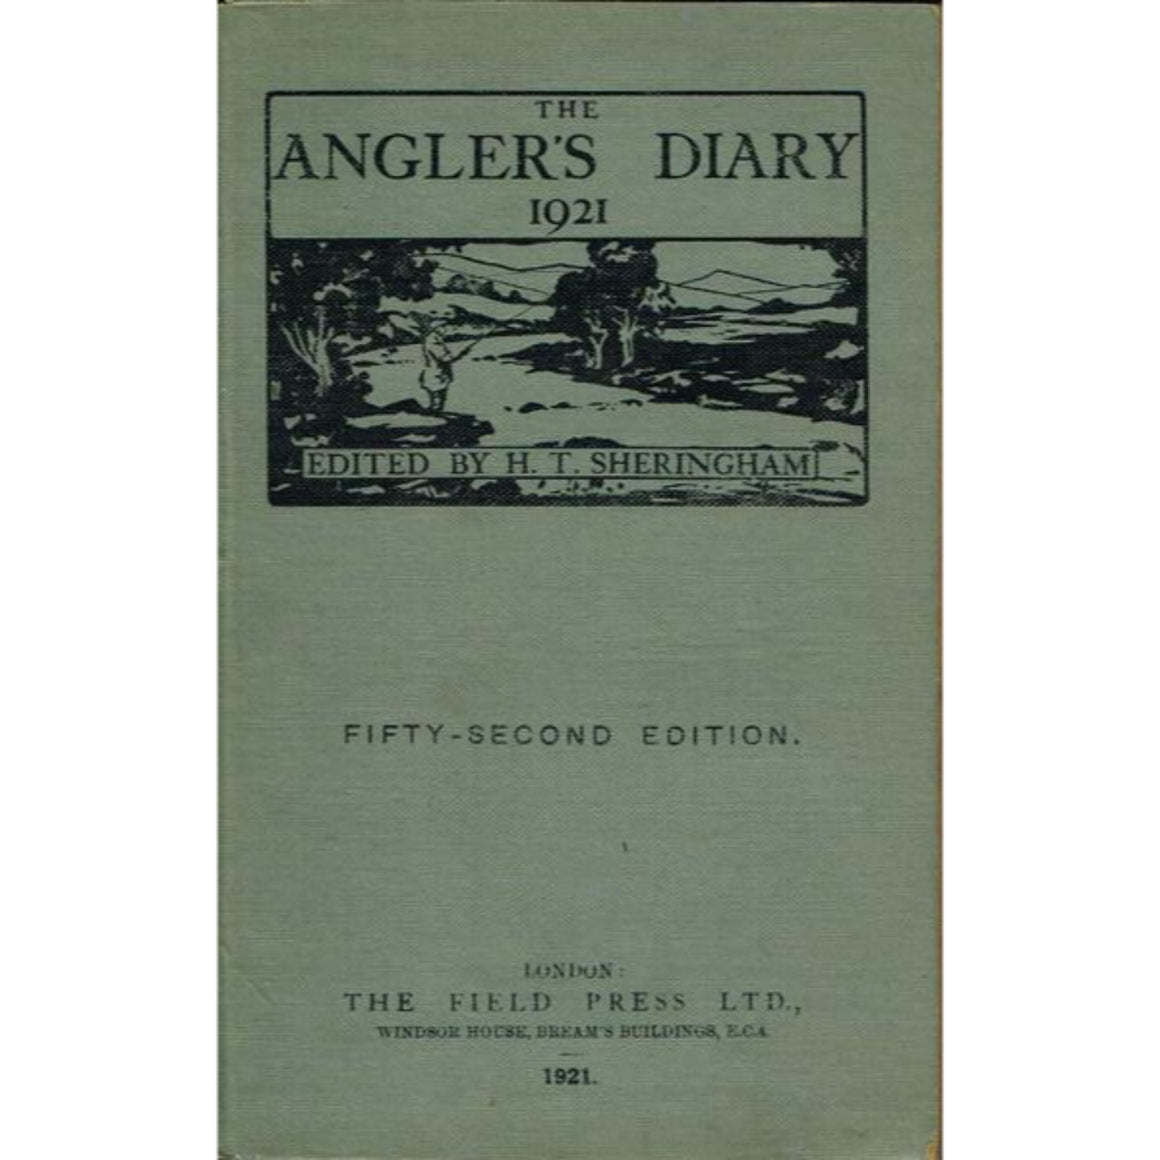 The Angler's Diary